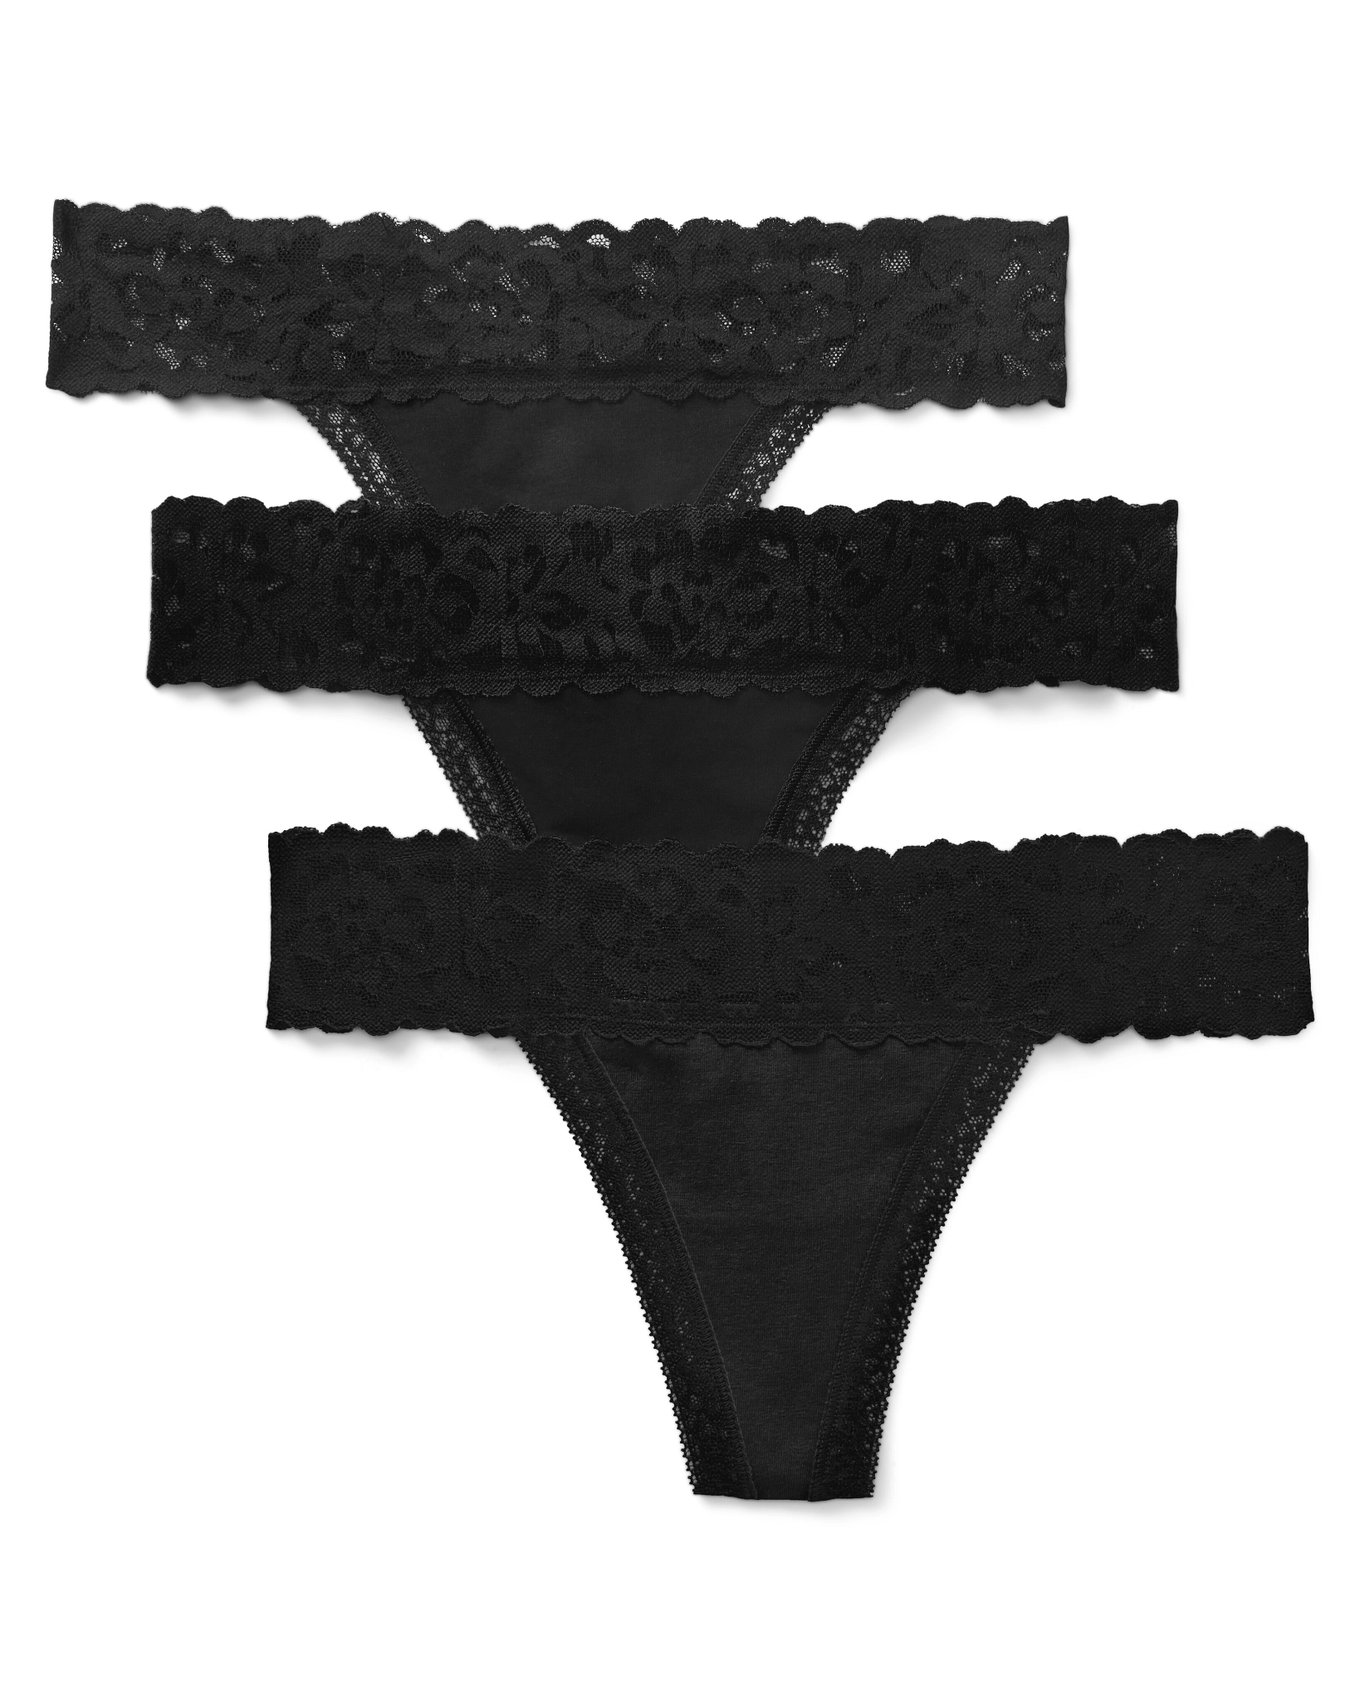 VICTORIA'S SECRET VERY SEXY Black High Waist Thong Panty M MEDIUM